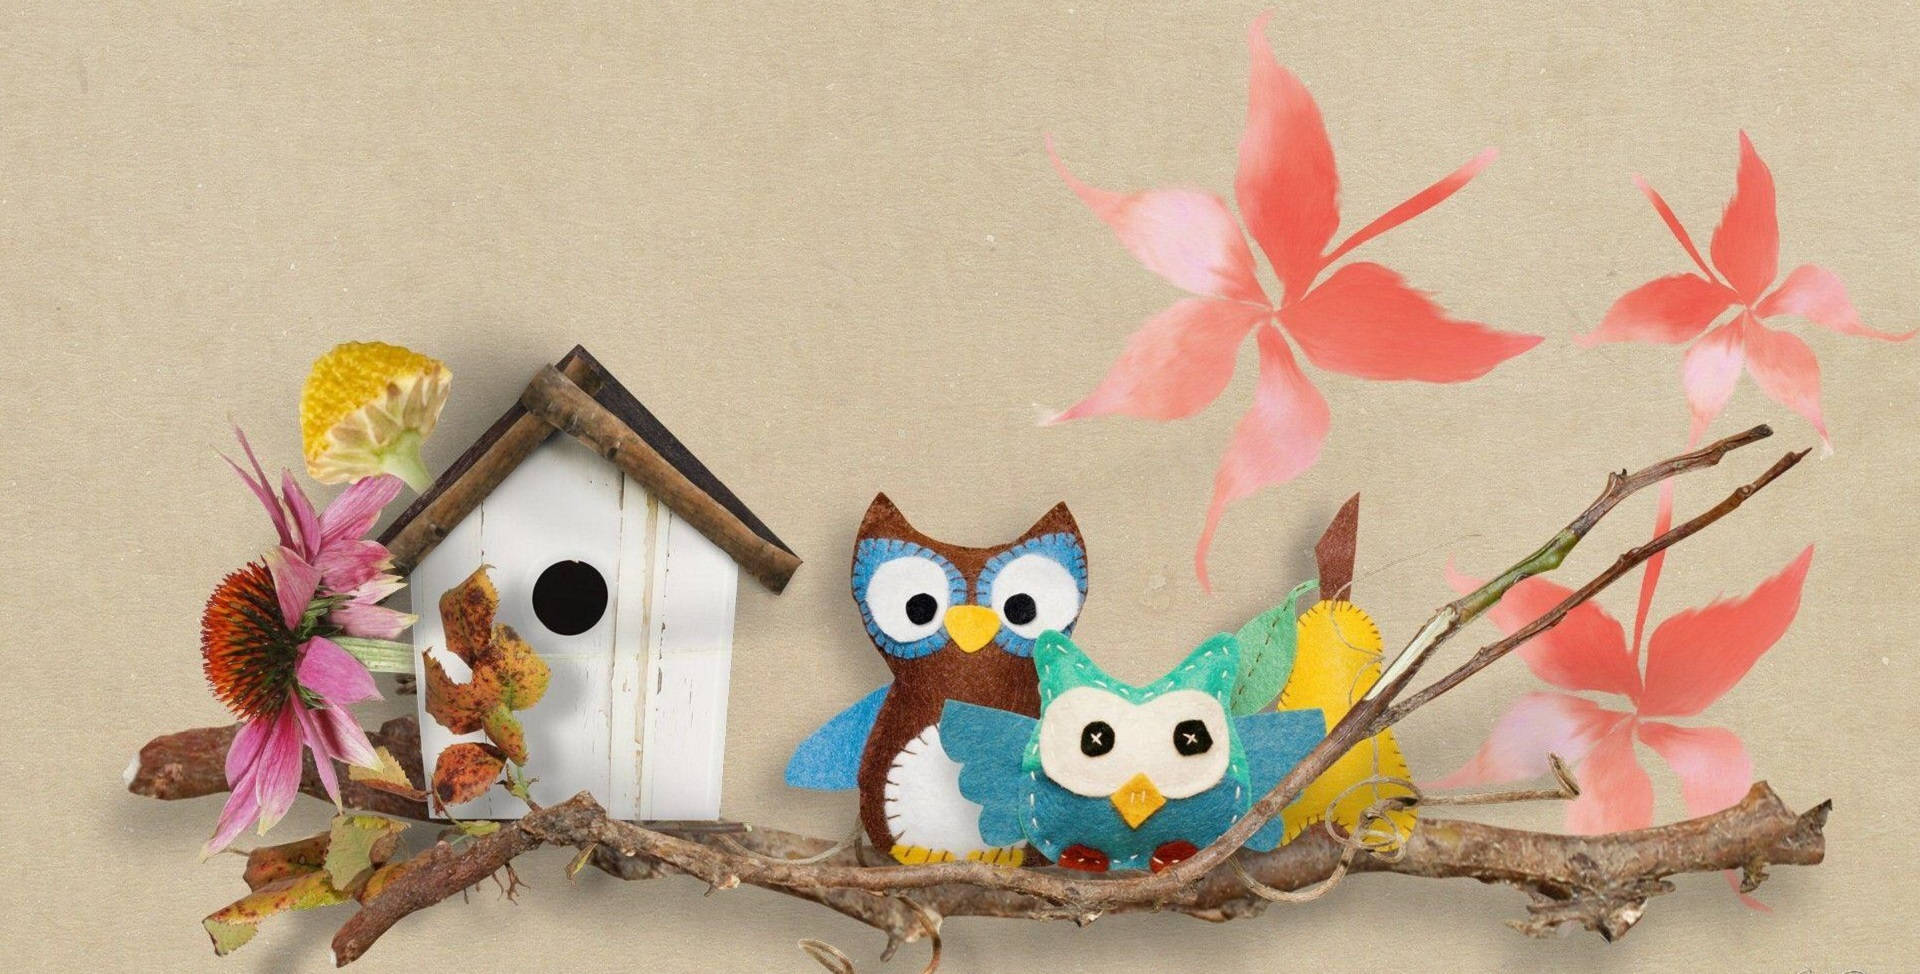 Whimsical Autumn Owls Wallpaper